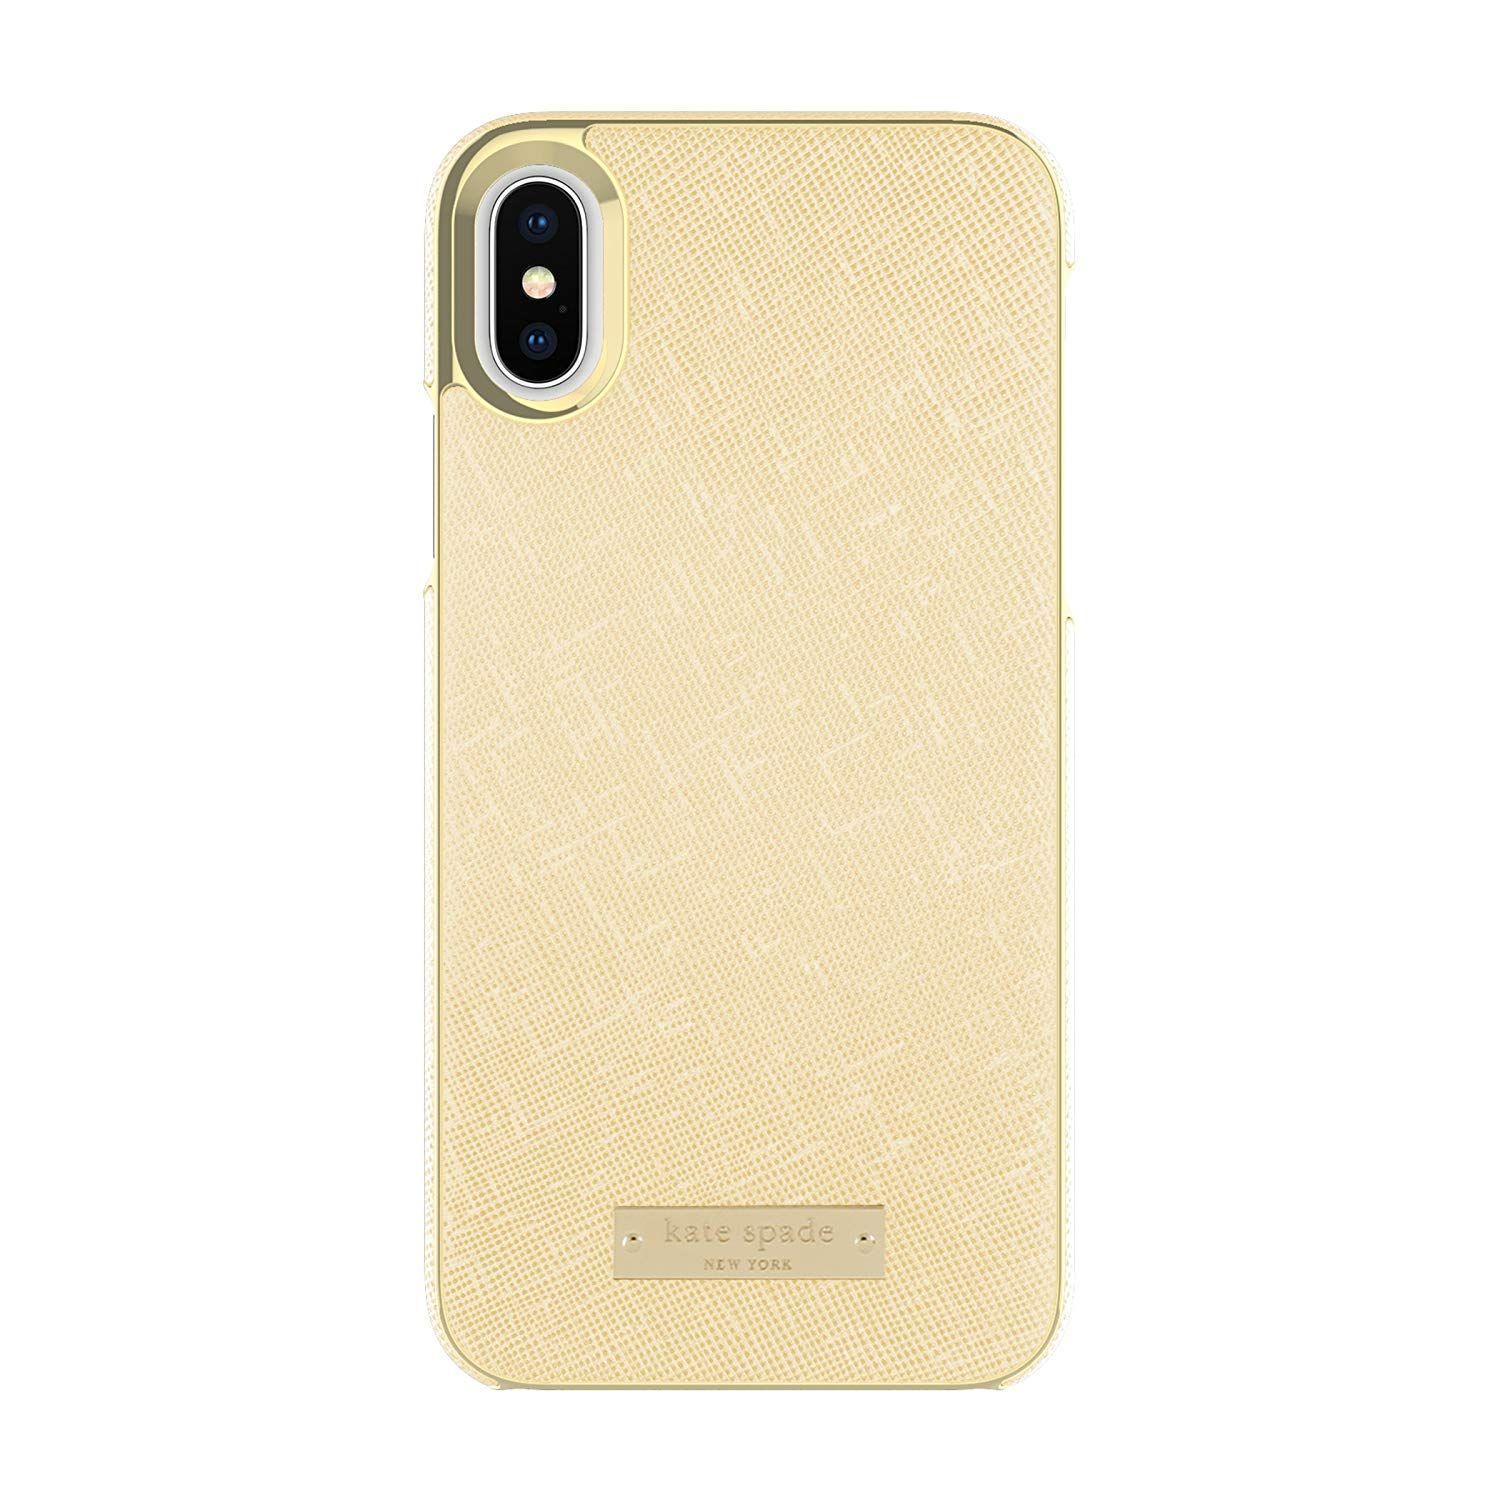 Gold iPhone Logo - Amazon.com: kate spade new york Wrap Case for iPhone X - Saffiano ...